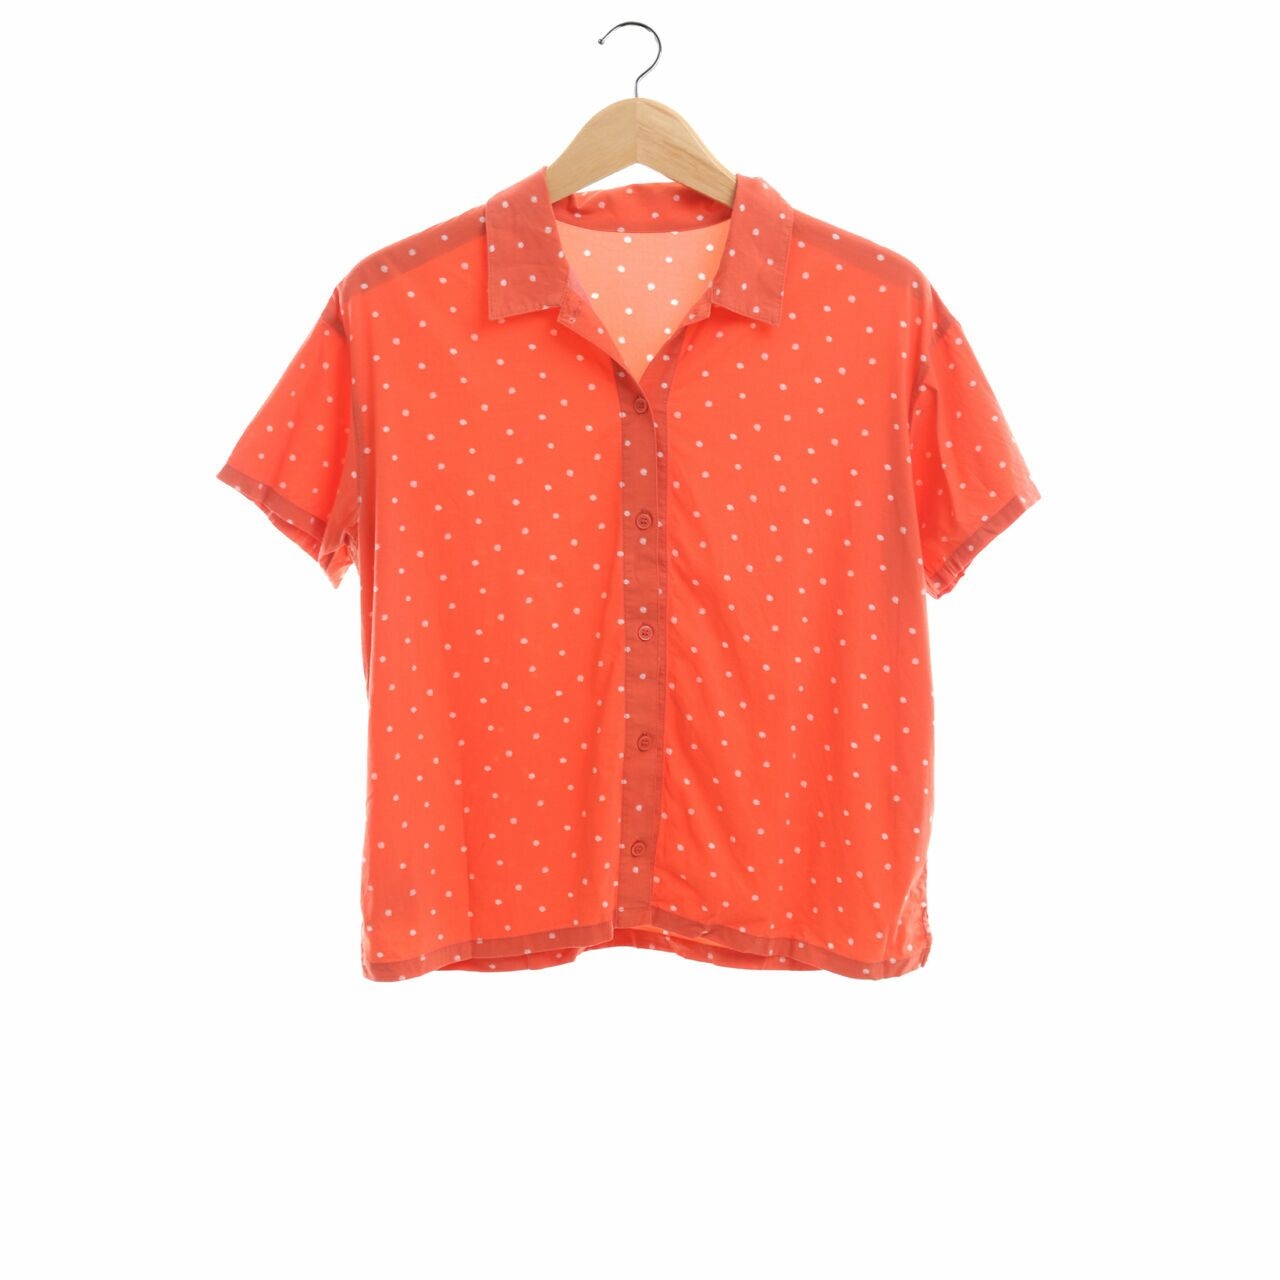 UNIQLO Orange Polkadots Shirt